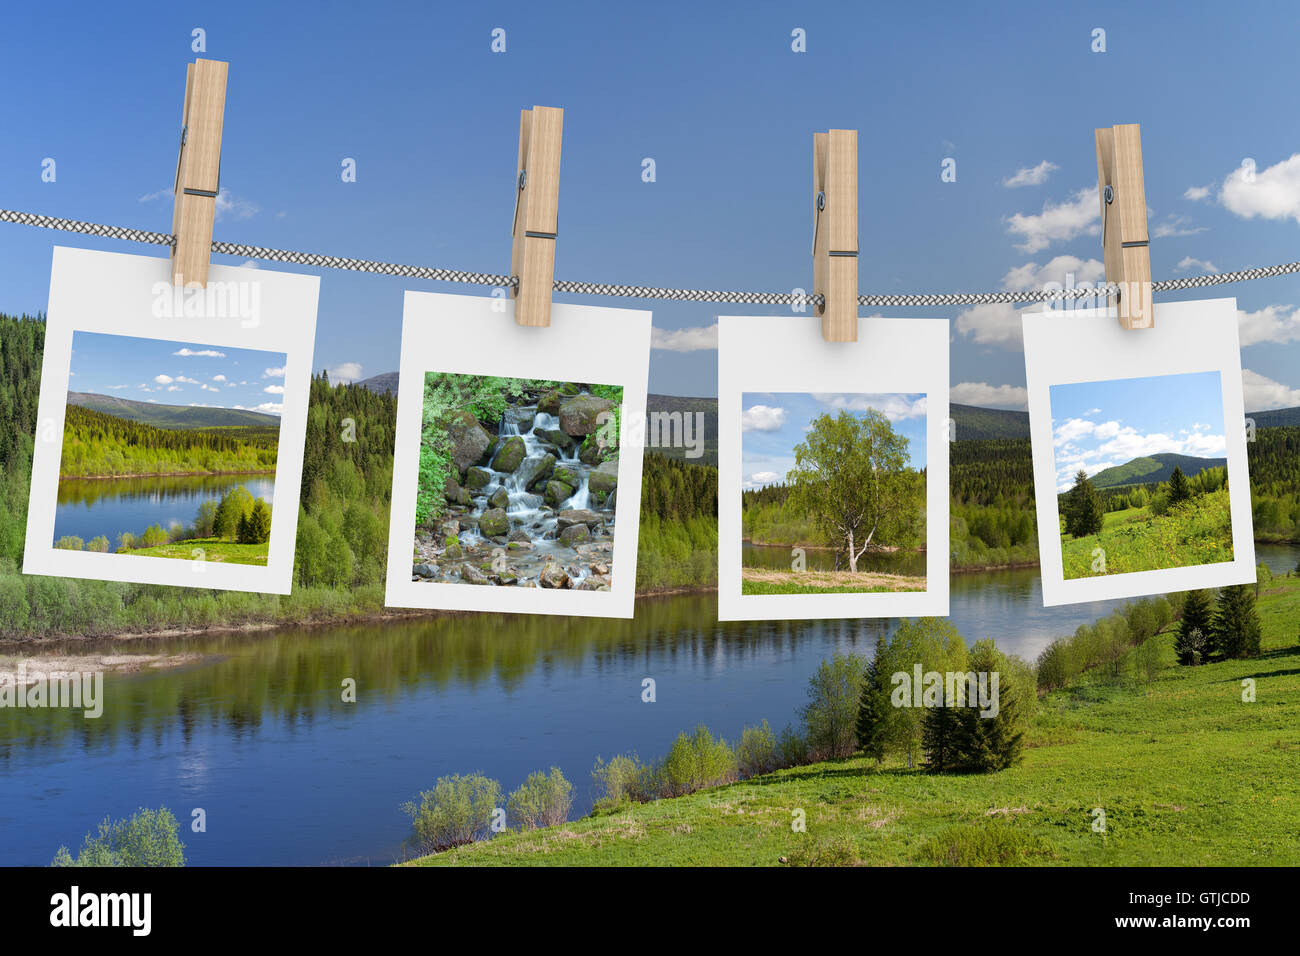 Landscape photographs hanging on clothesline. 3D image Stock Photo